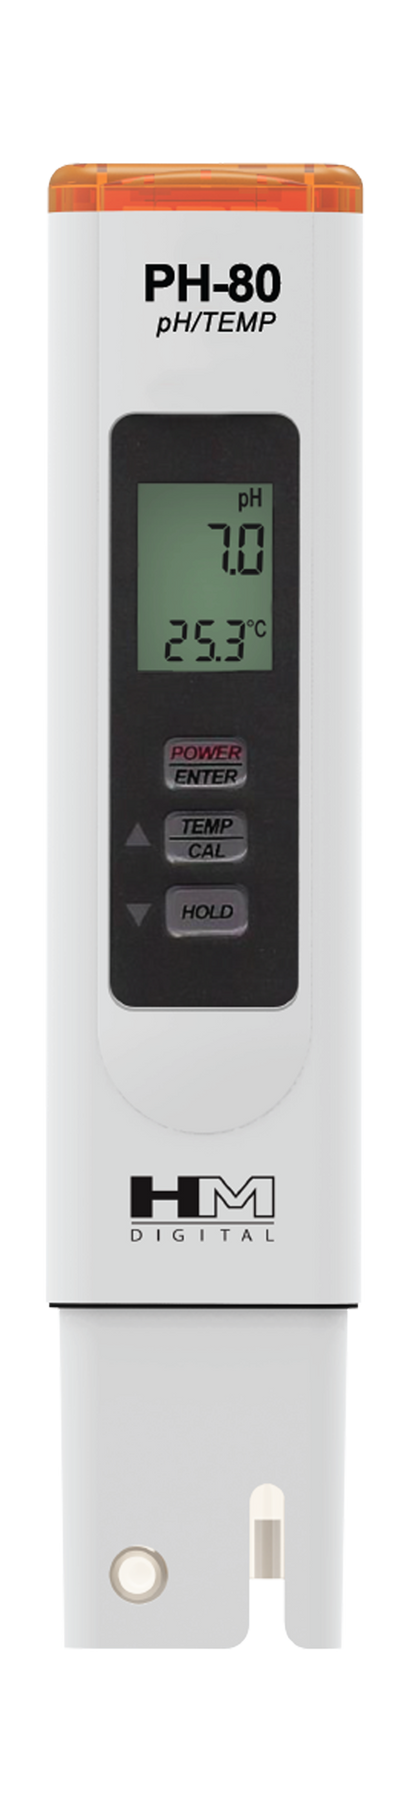 HM Digital pH-80s PH/Temperature Meter